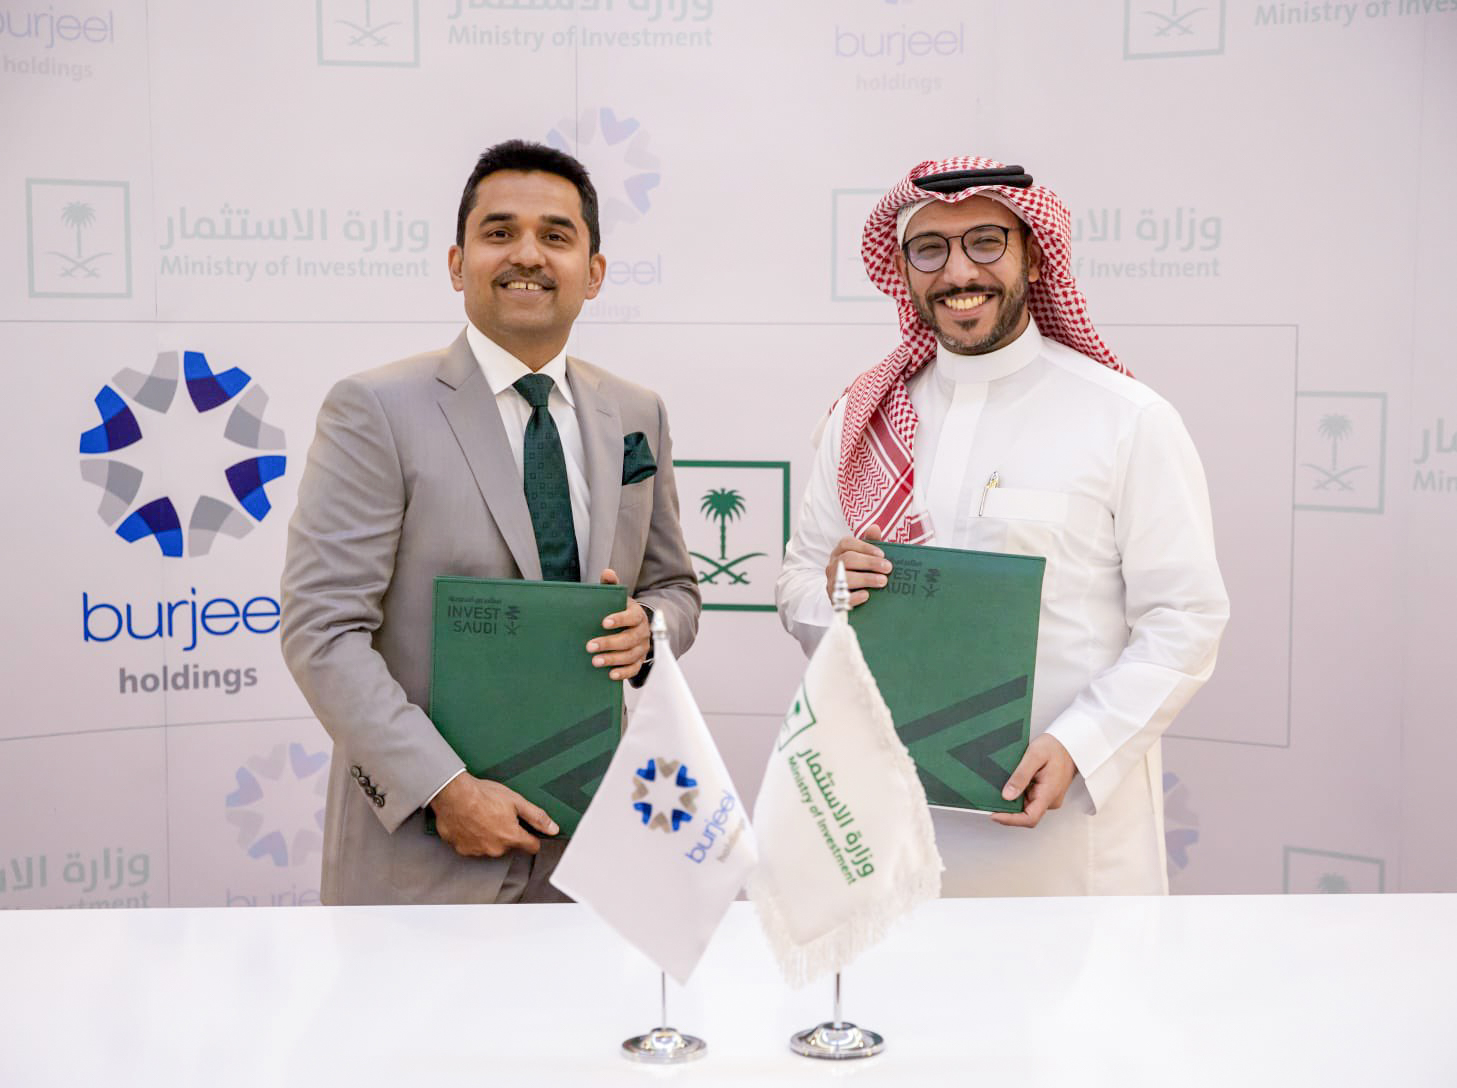 Burjeel Holdings is expanding its footprint to the Kingdom of Saudi Arabia